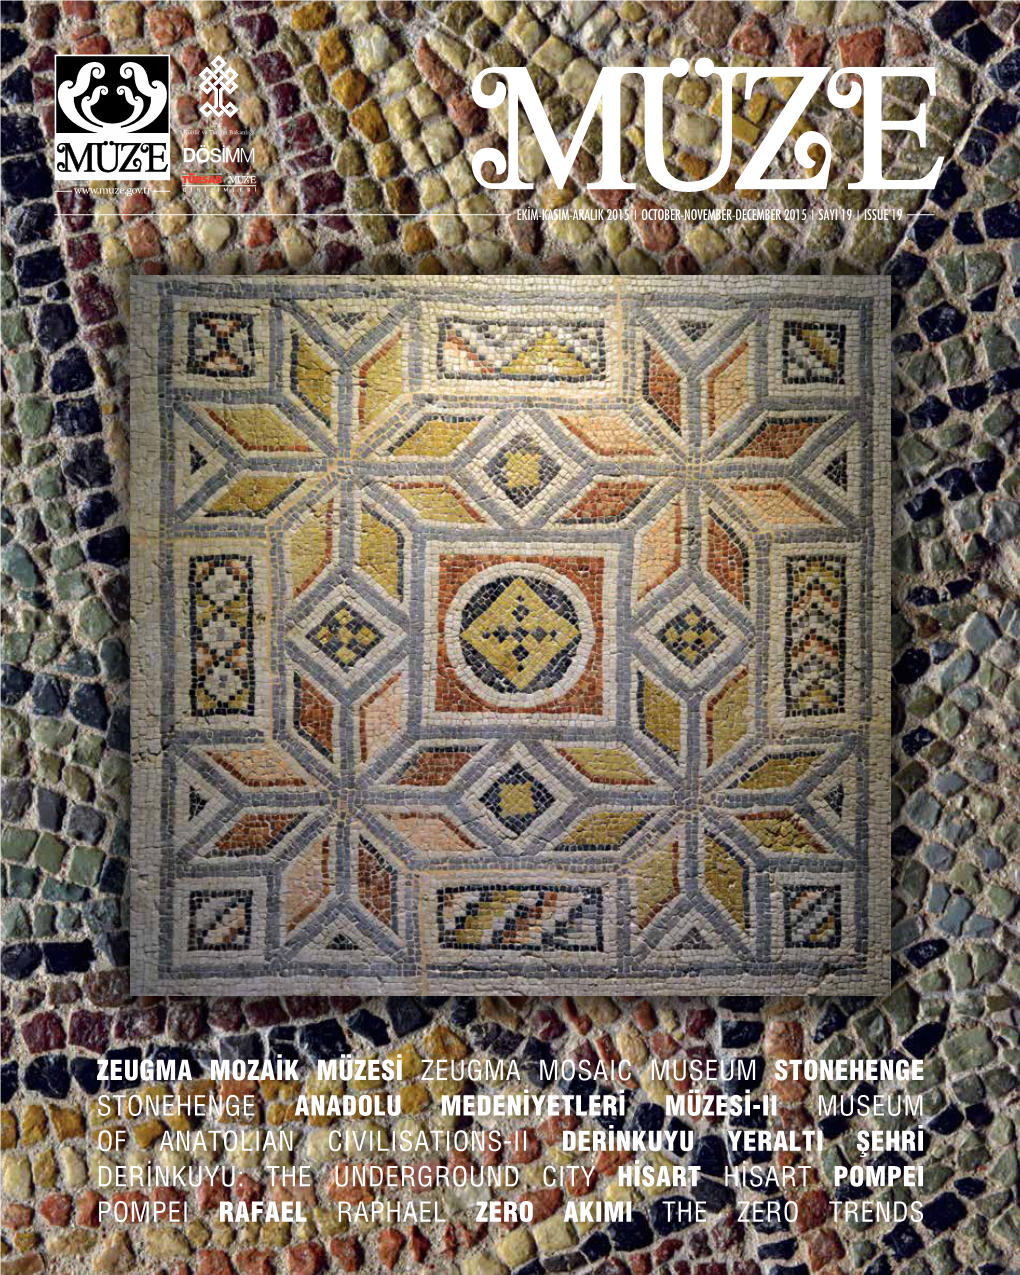 Zeugma Mozaik Müzesi Zeugma Mosaic Museum Stonehenge